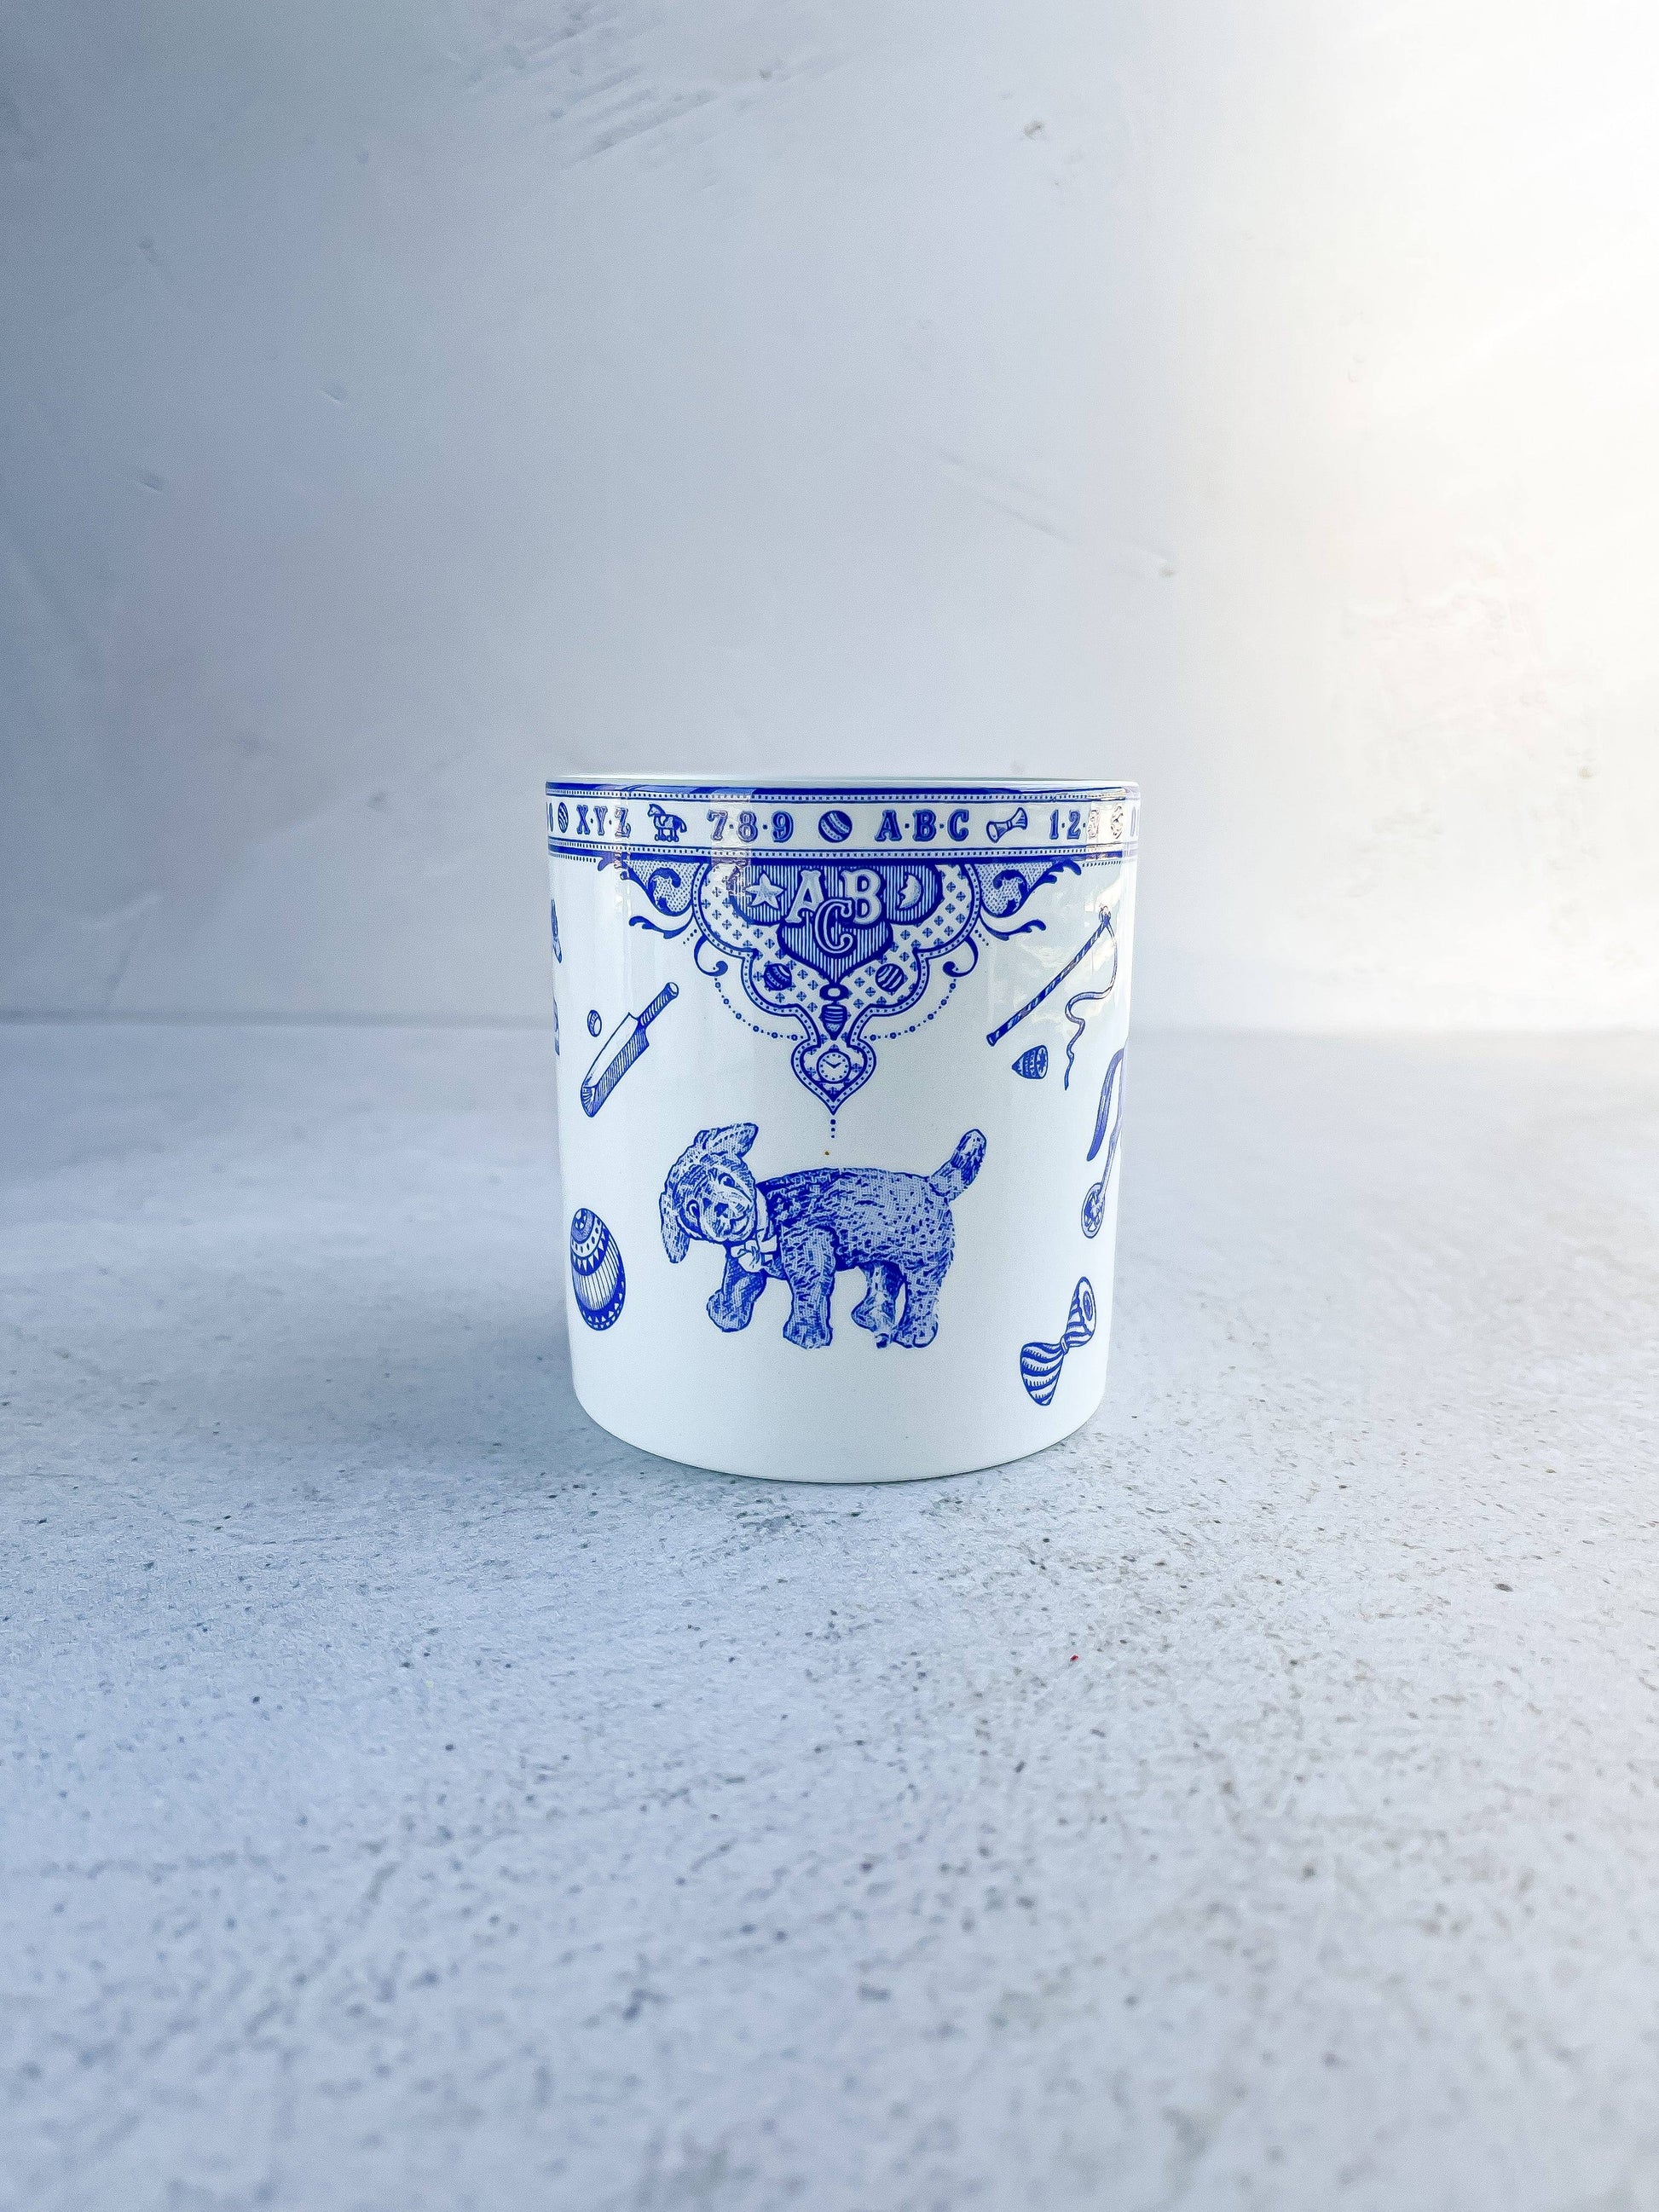 Spode Mug and Cereal Bowl - 'Edwardian Childhood' Collection - SOSC Home